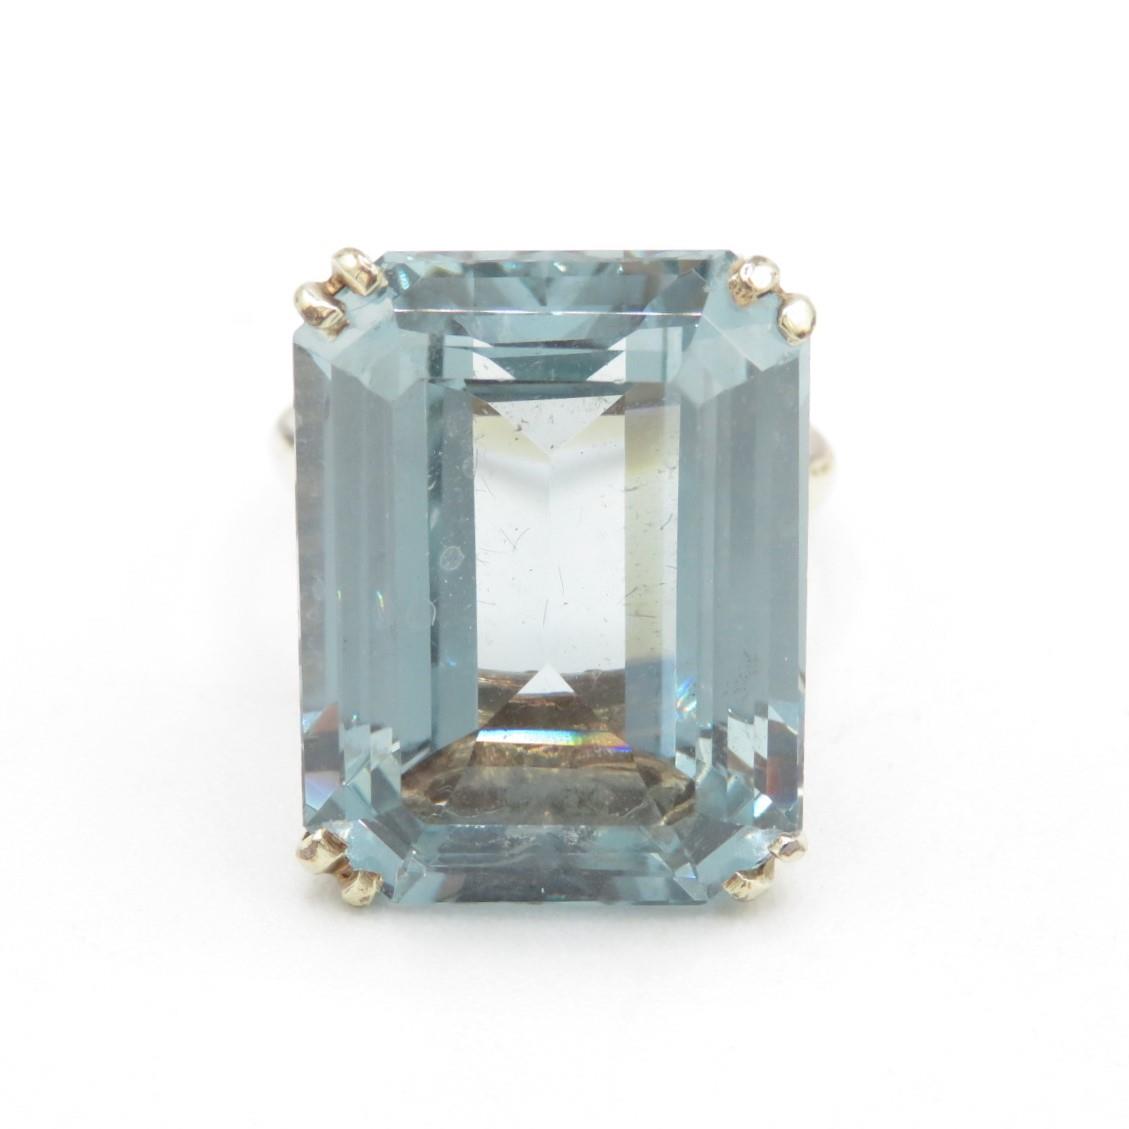 9ct gold blue gemstone cocktail ring Size N 9.9 g